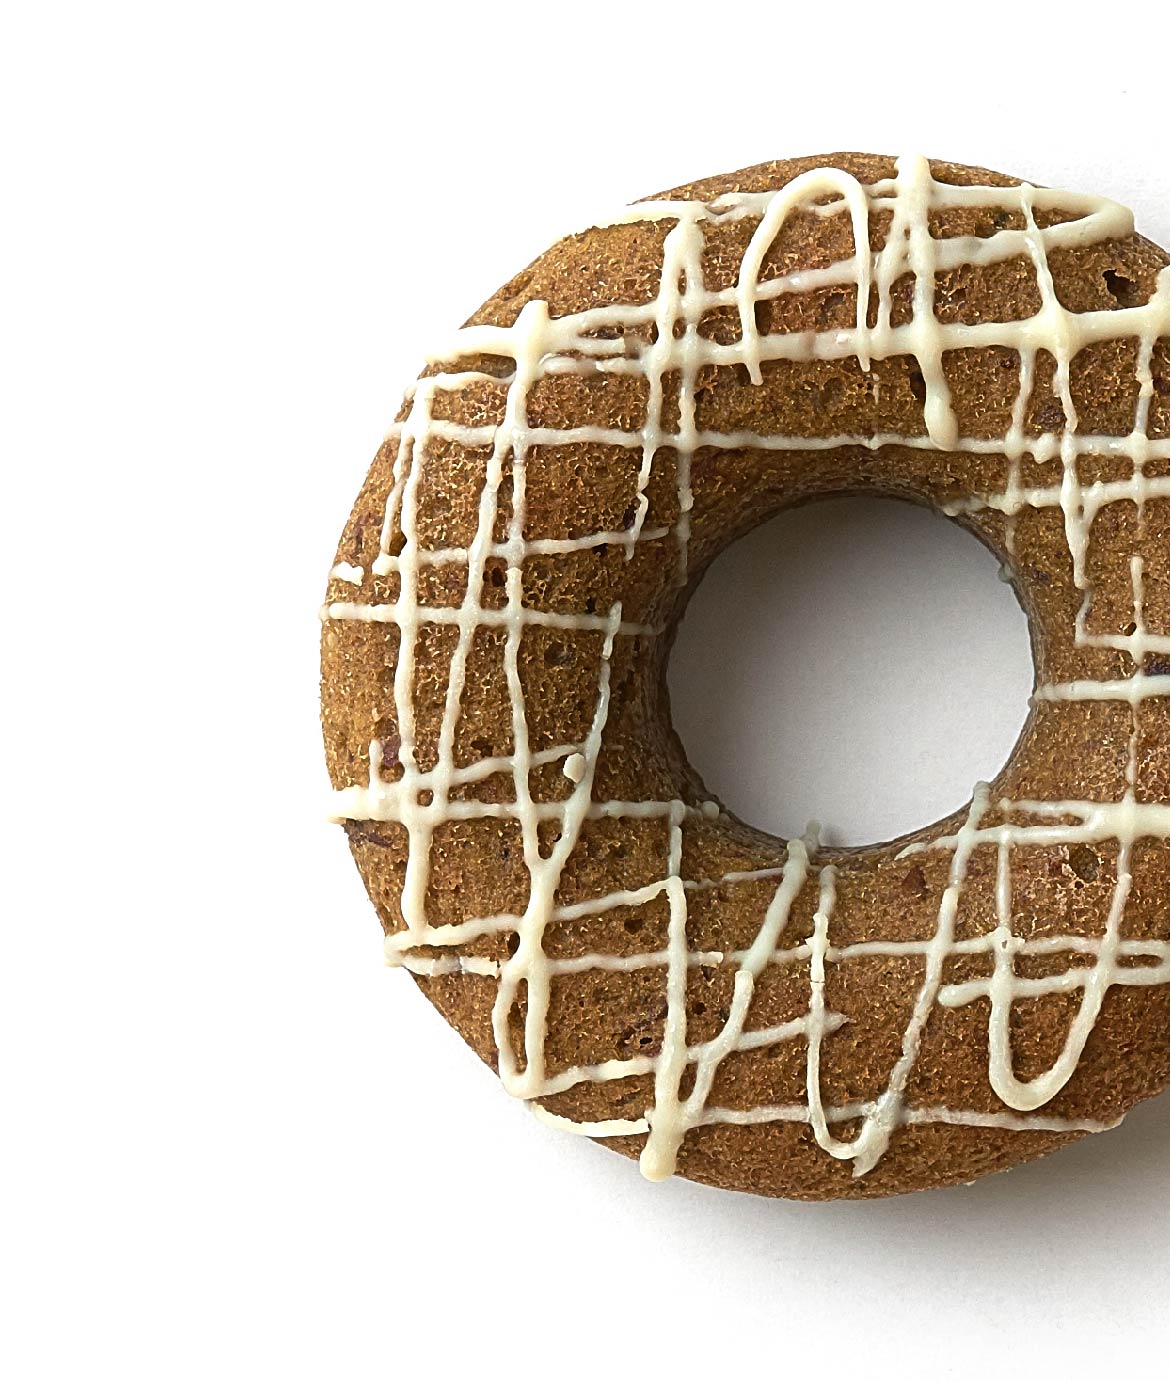 matcha azuki doughnut